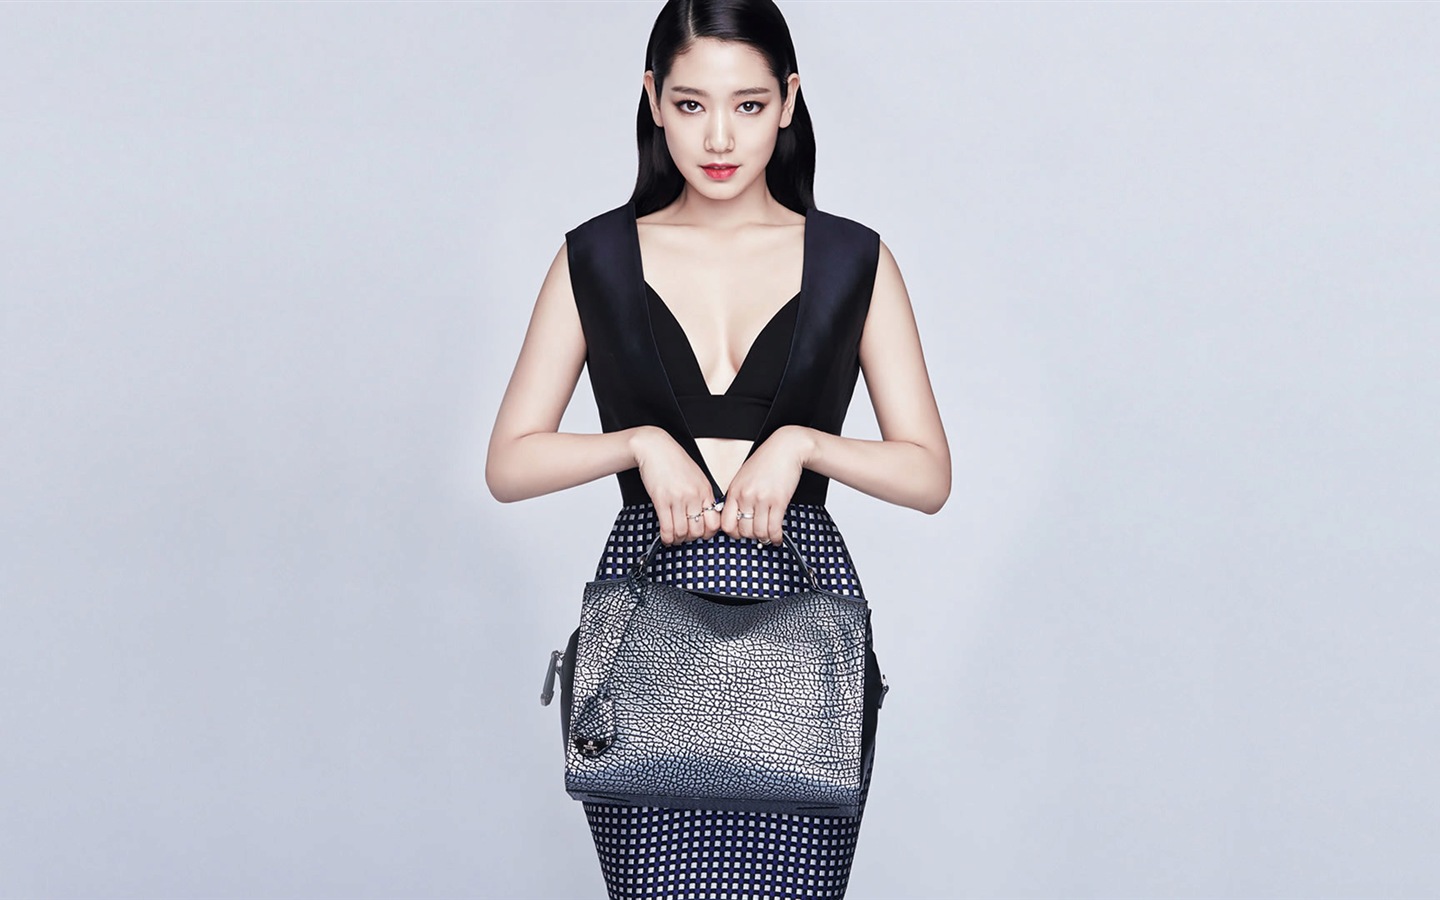 Südkoreanische Schauspielerin Park Shin Hye HD Wallpapers #2 - 1440x900